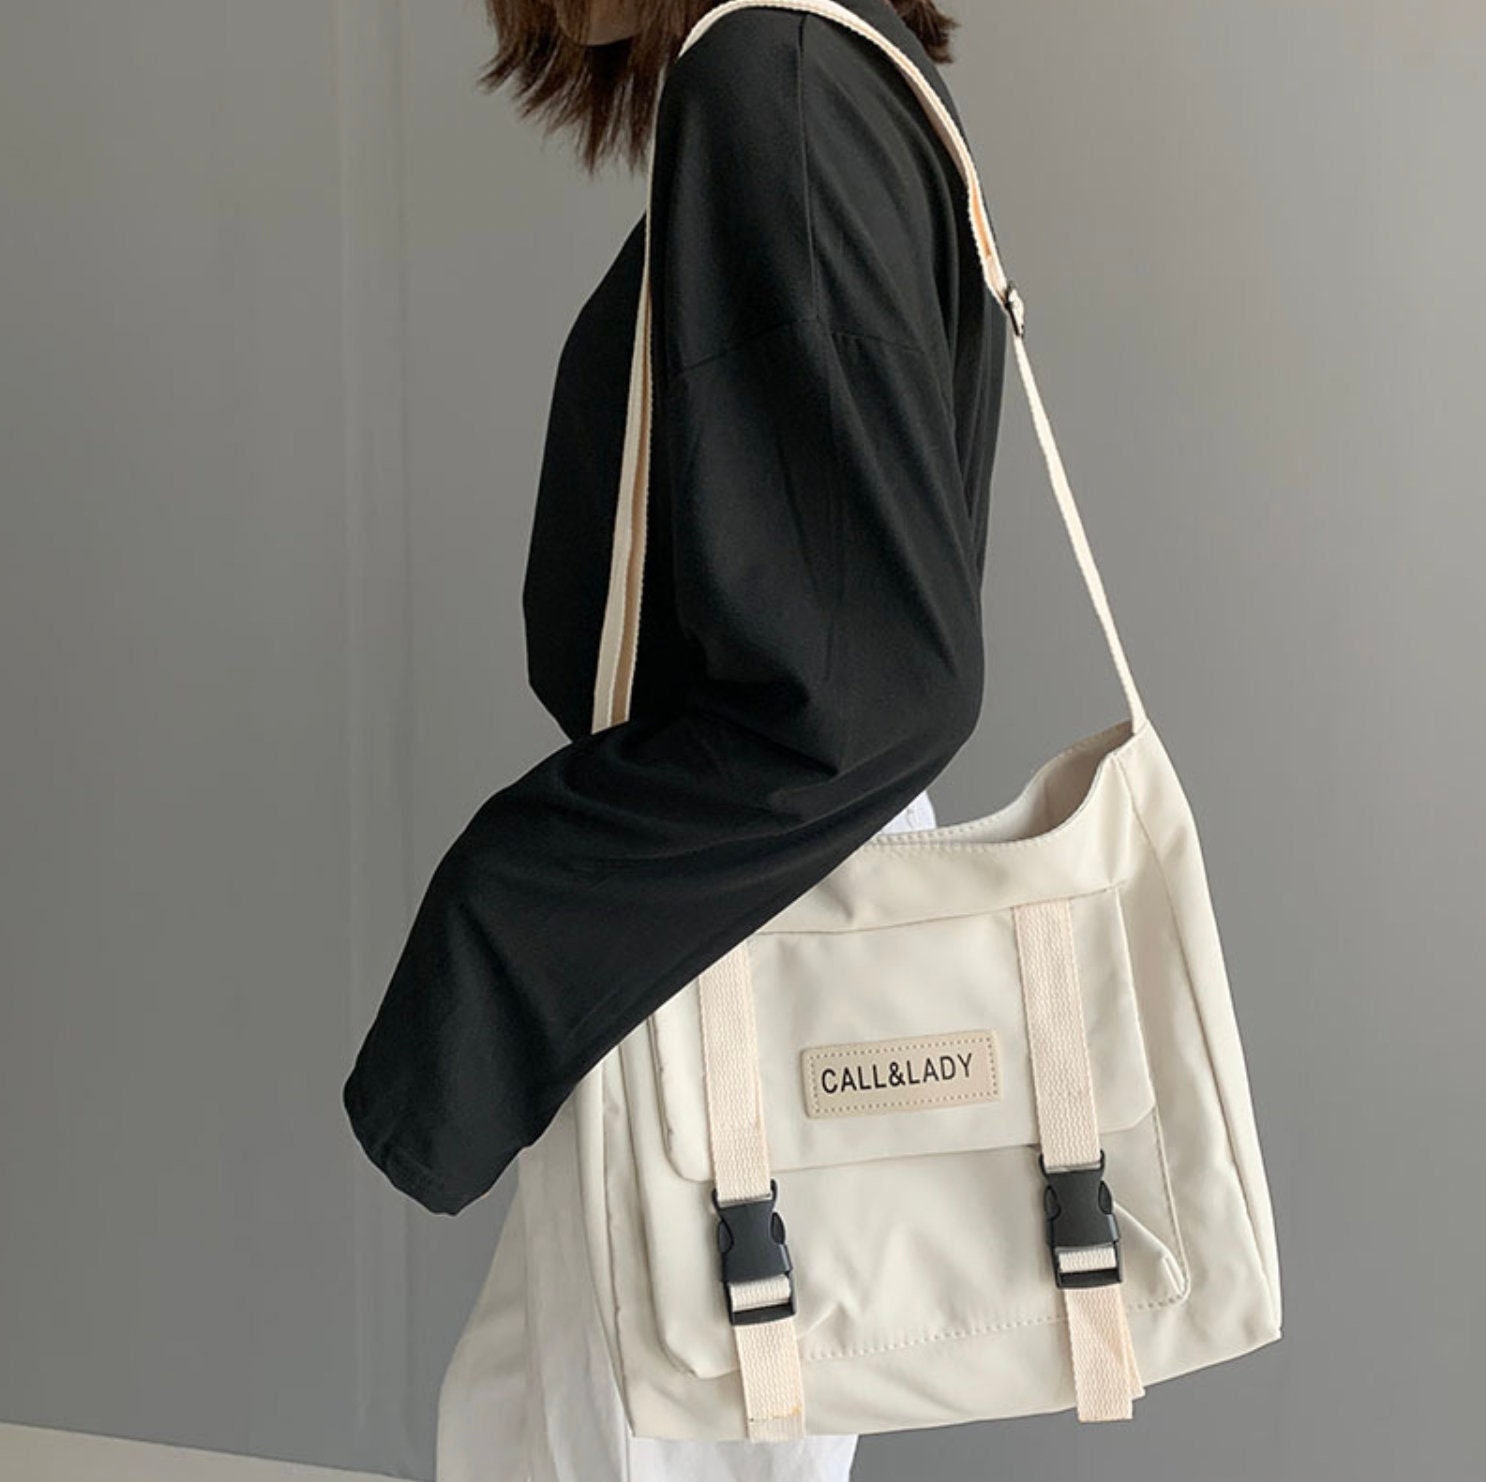 Women Canvas Zipper Bag Student Tote Shoulder Messenger Bag Embroidery Bear  Small Corduroy Bag Satchel Travel Purse Handbag